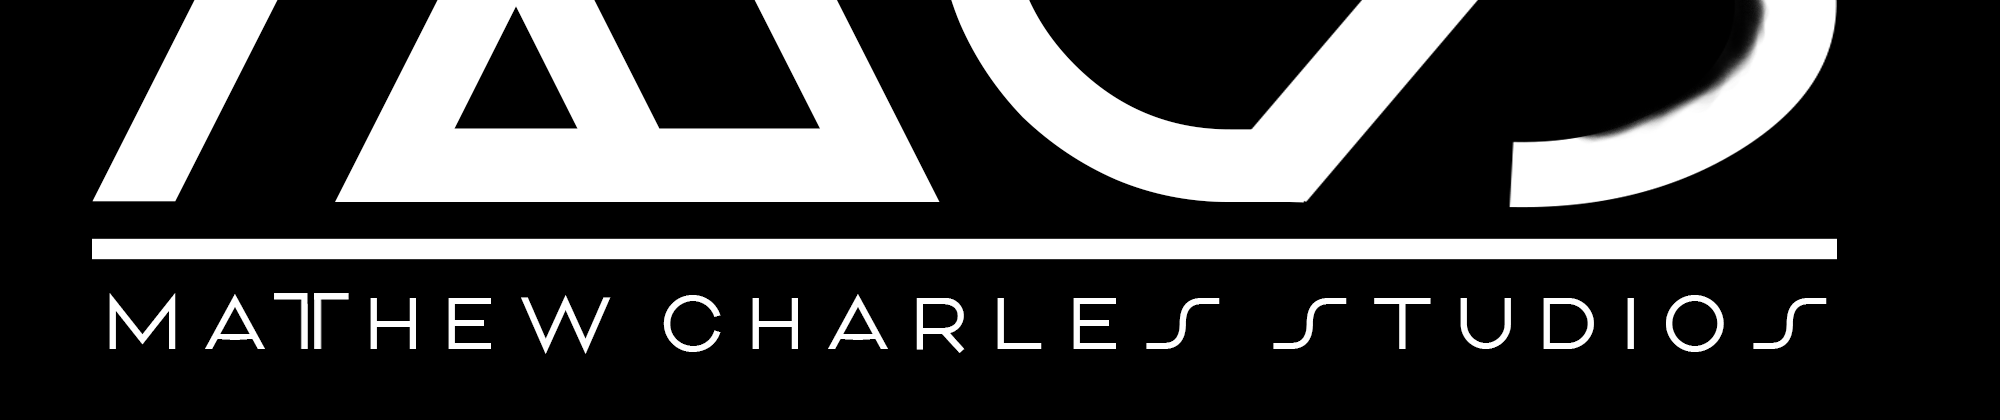 MATTHEW CHARLES's profile banner